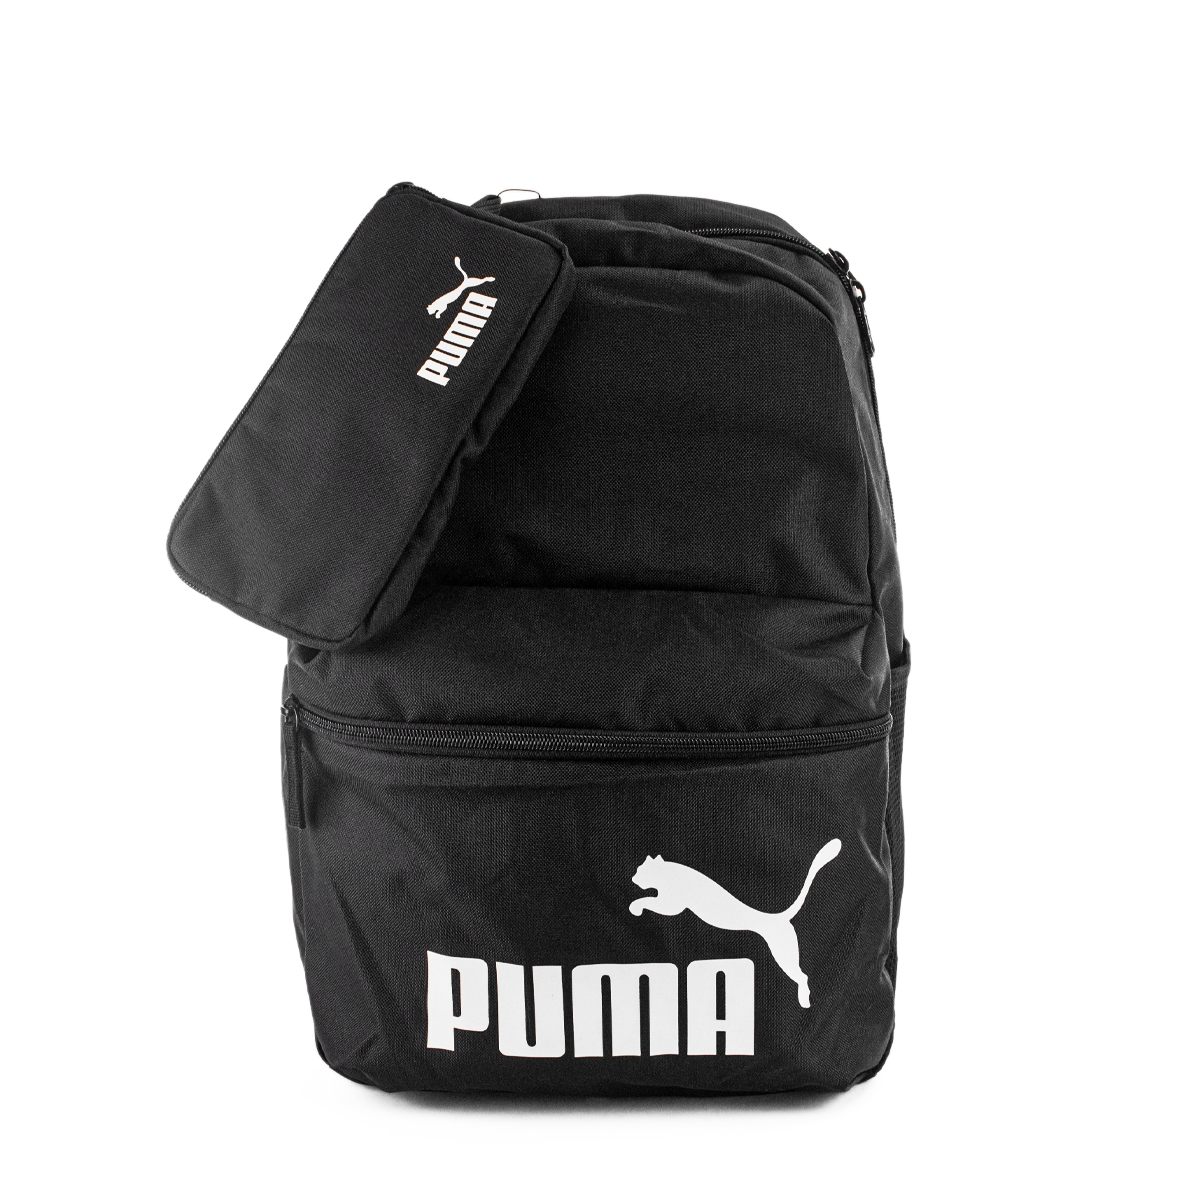 Puma Phase Rucksack Set 78560-01-